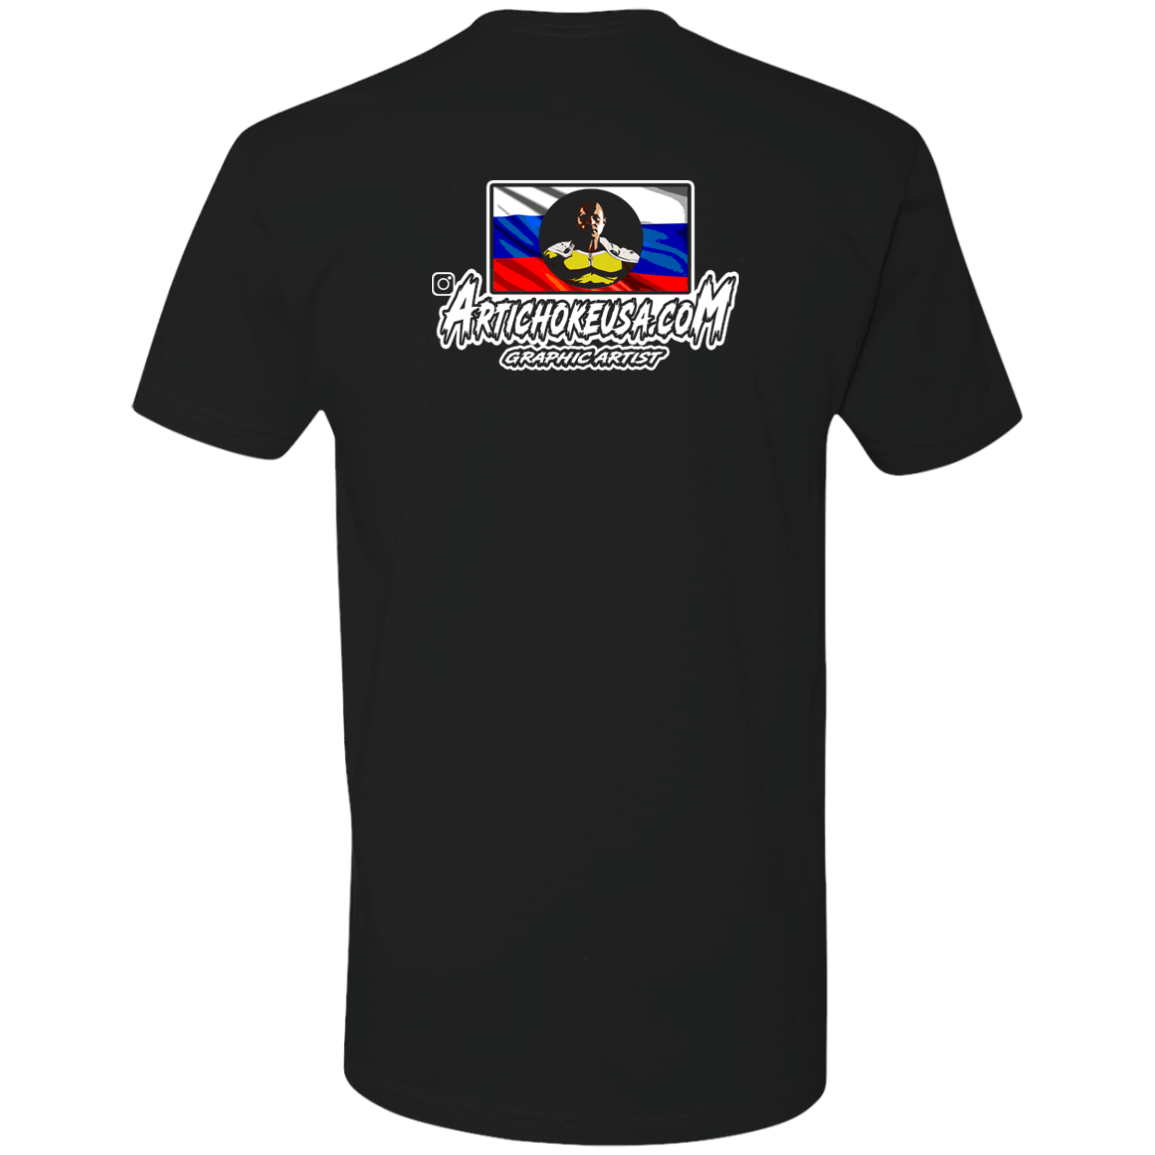 ArtichokeUSA Custom Design. One Punch Fedor. Fedor Emelianenko/One Punch Man Fan Art. Men's Premium Short Sleeve T-Shirt